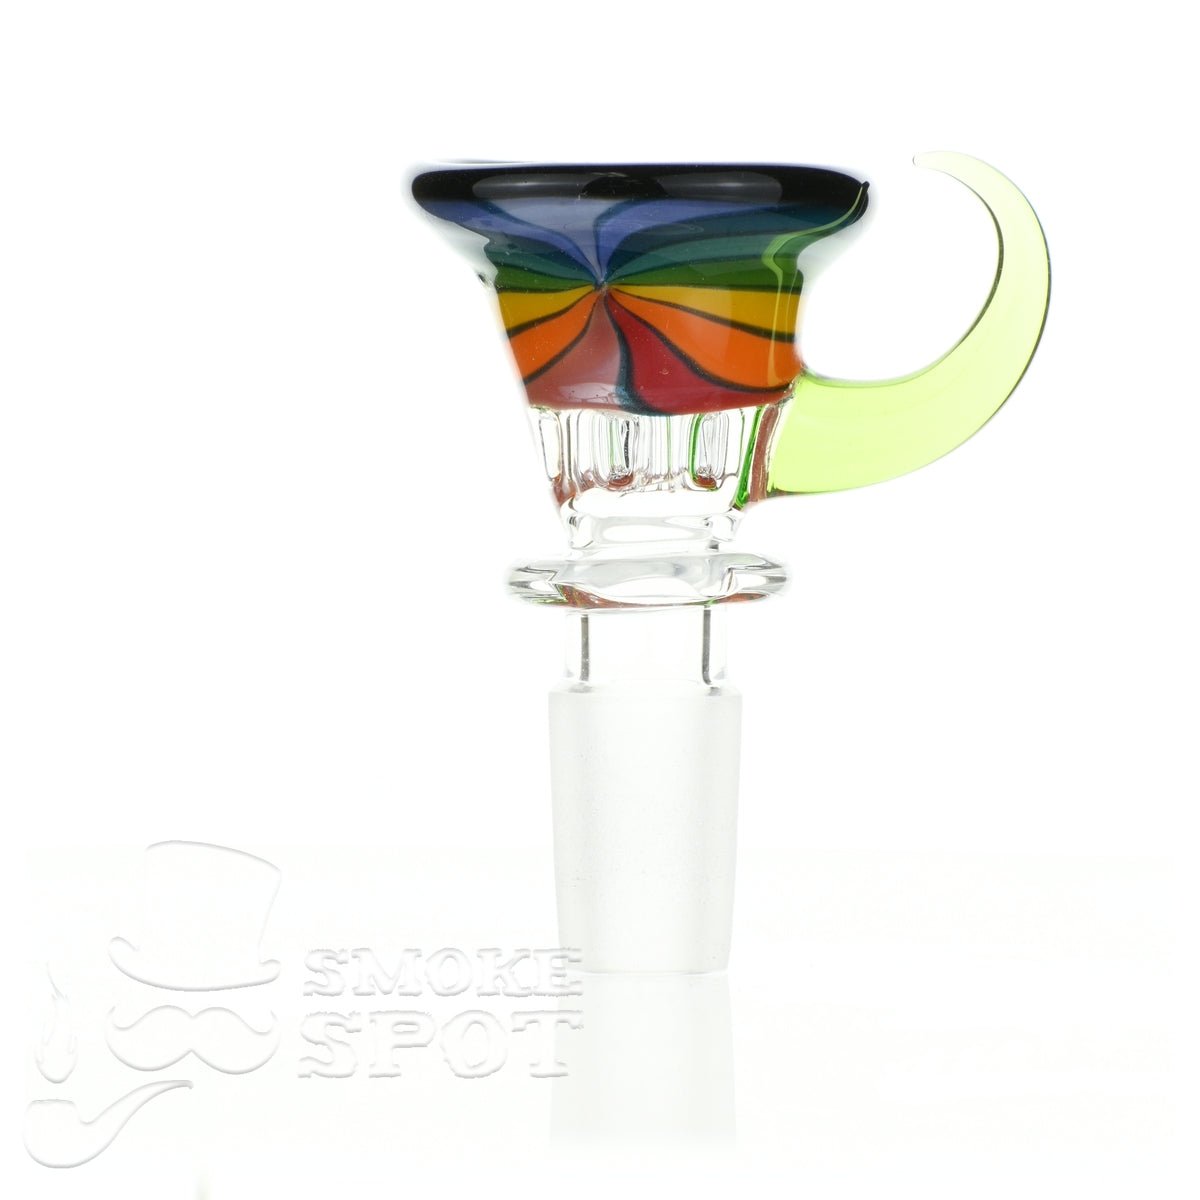 Glass enthuastic bowl 14 mm with a hook #117 - Smoke Spot Smoke Shop